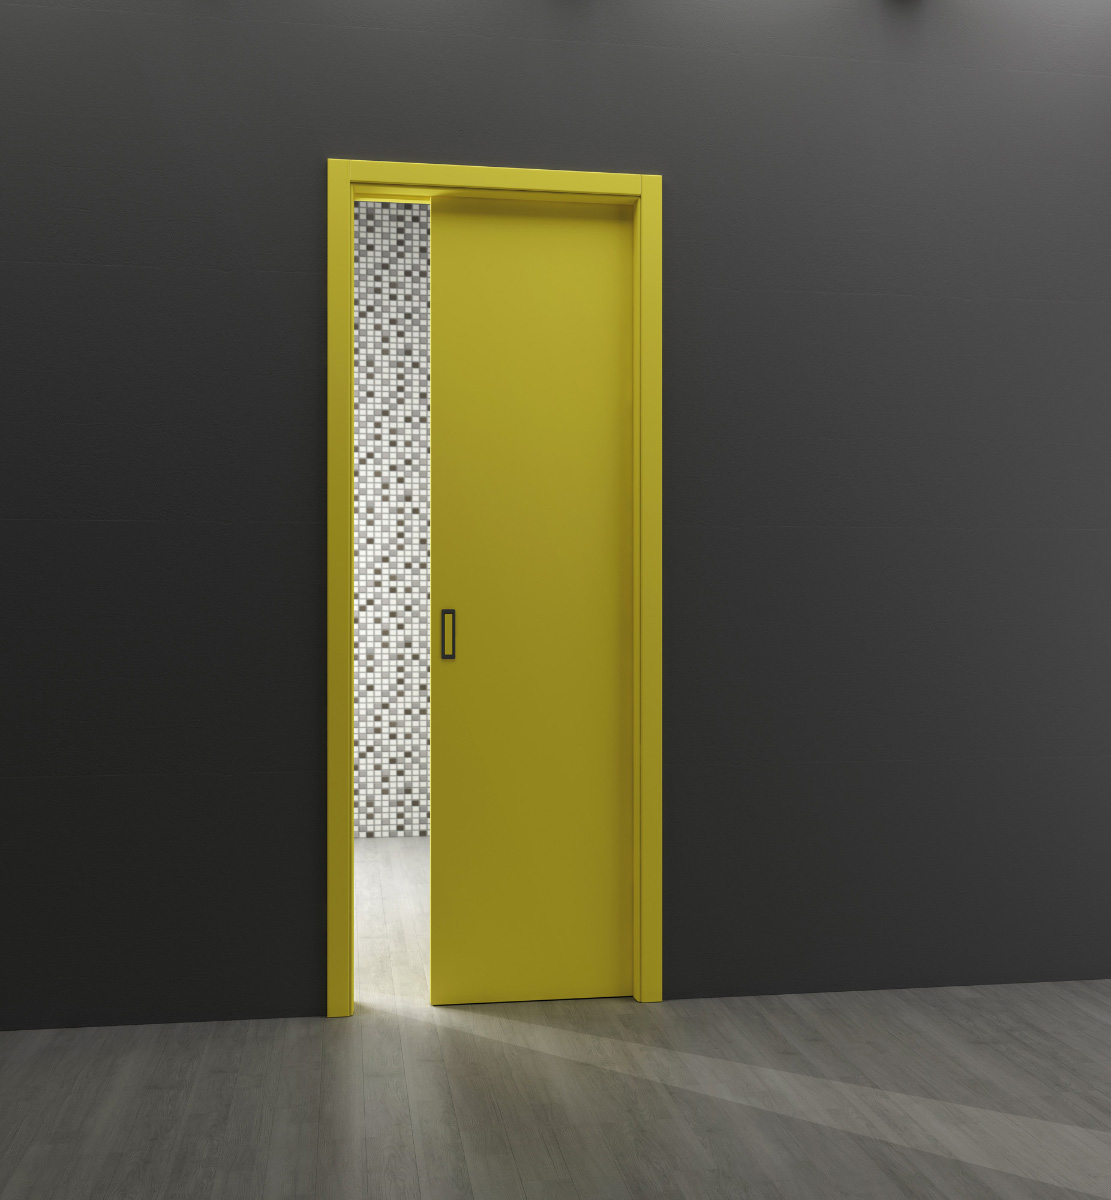 Posuvné dveře Millenium ve žletém matném laku z kolekce HANÁK.